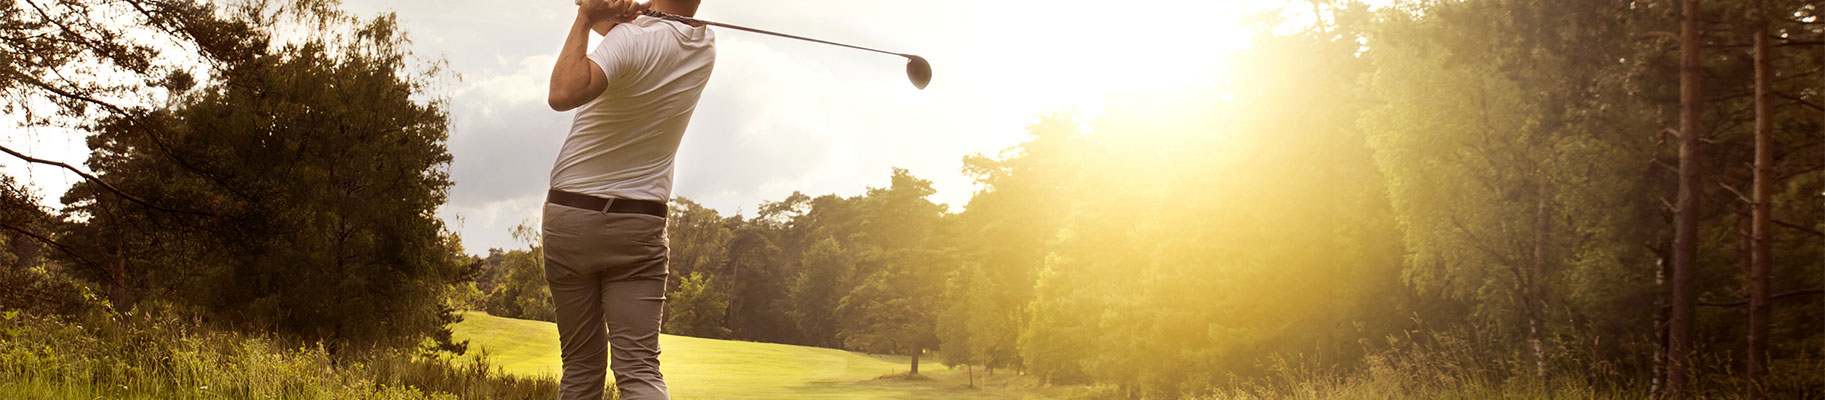 Golf Courses - New Braunfels